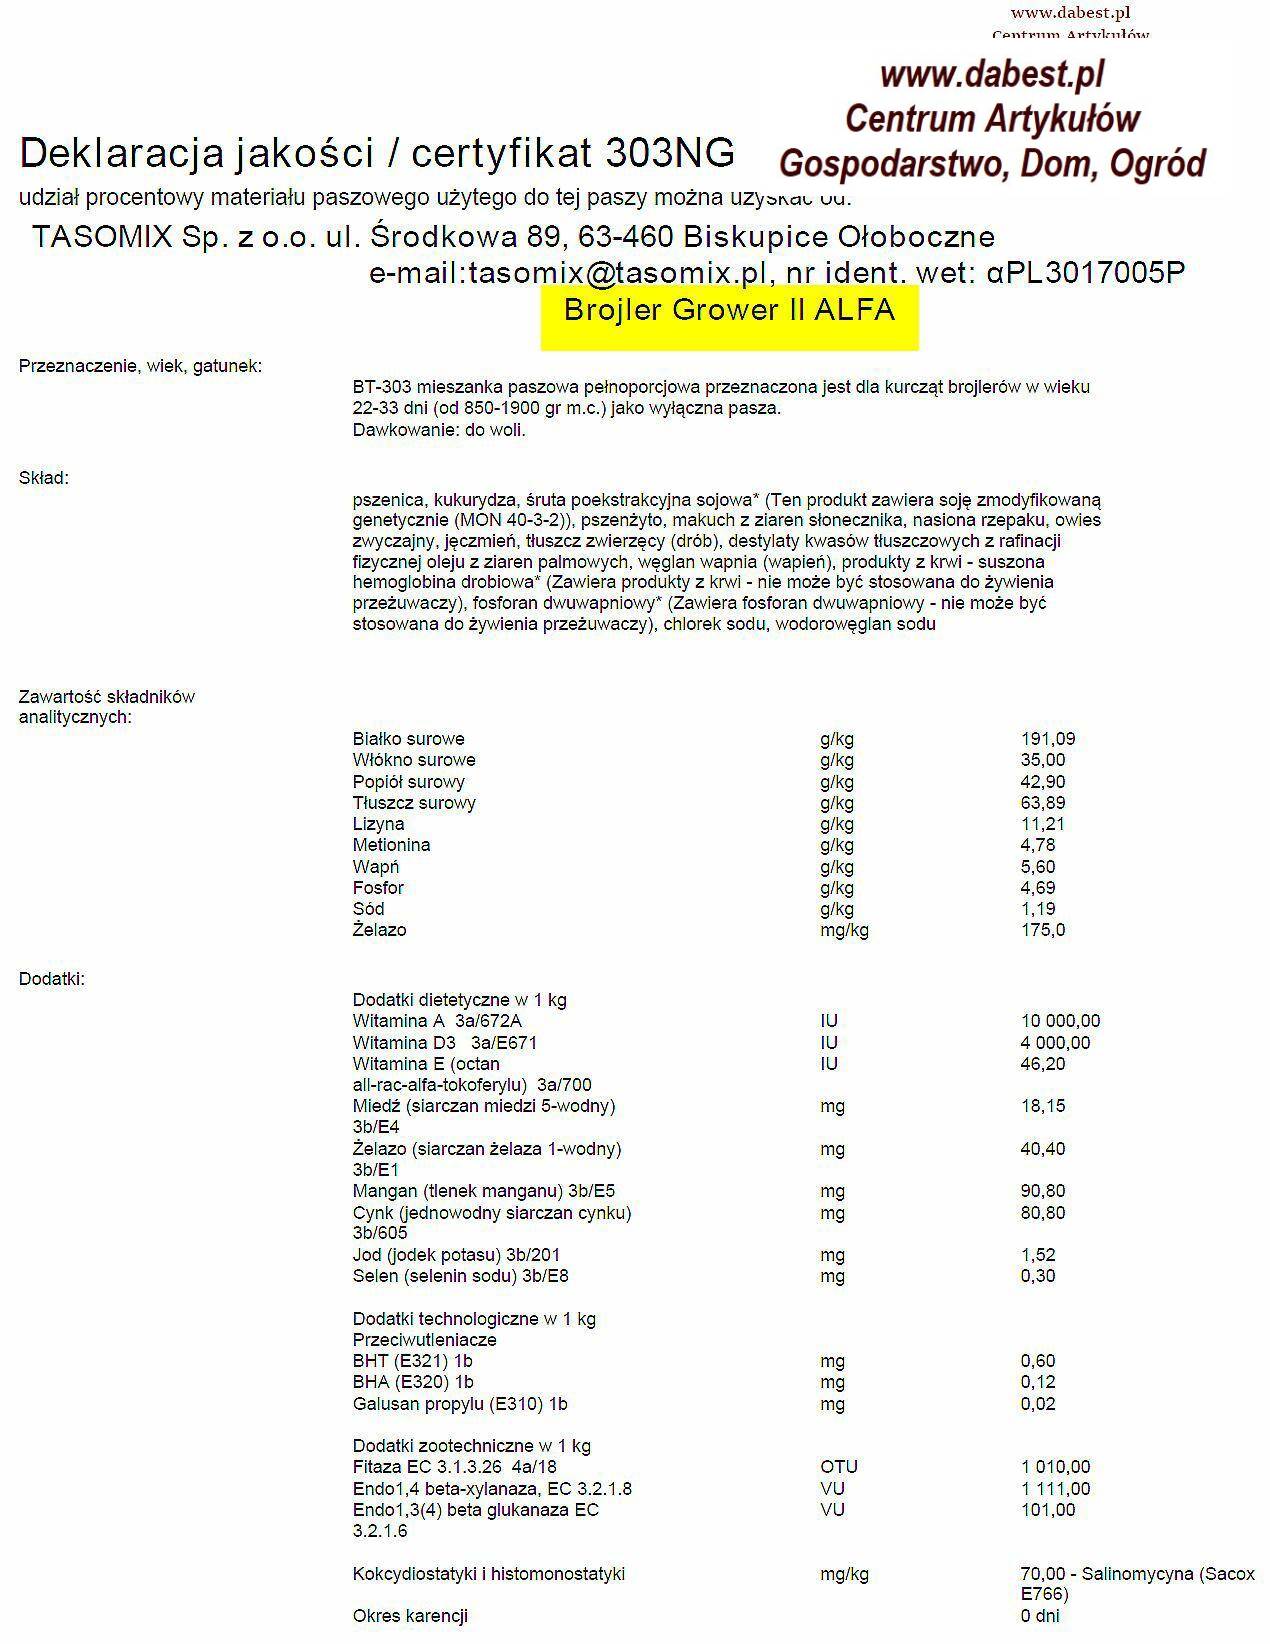 Tasomix - Brojler Grower II ALFA gr.25kg